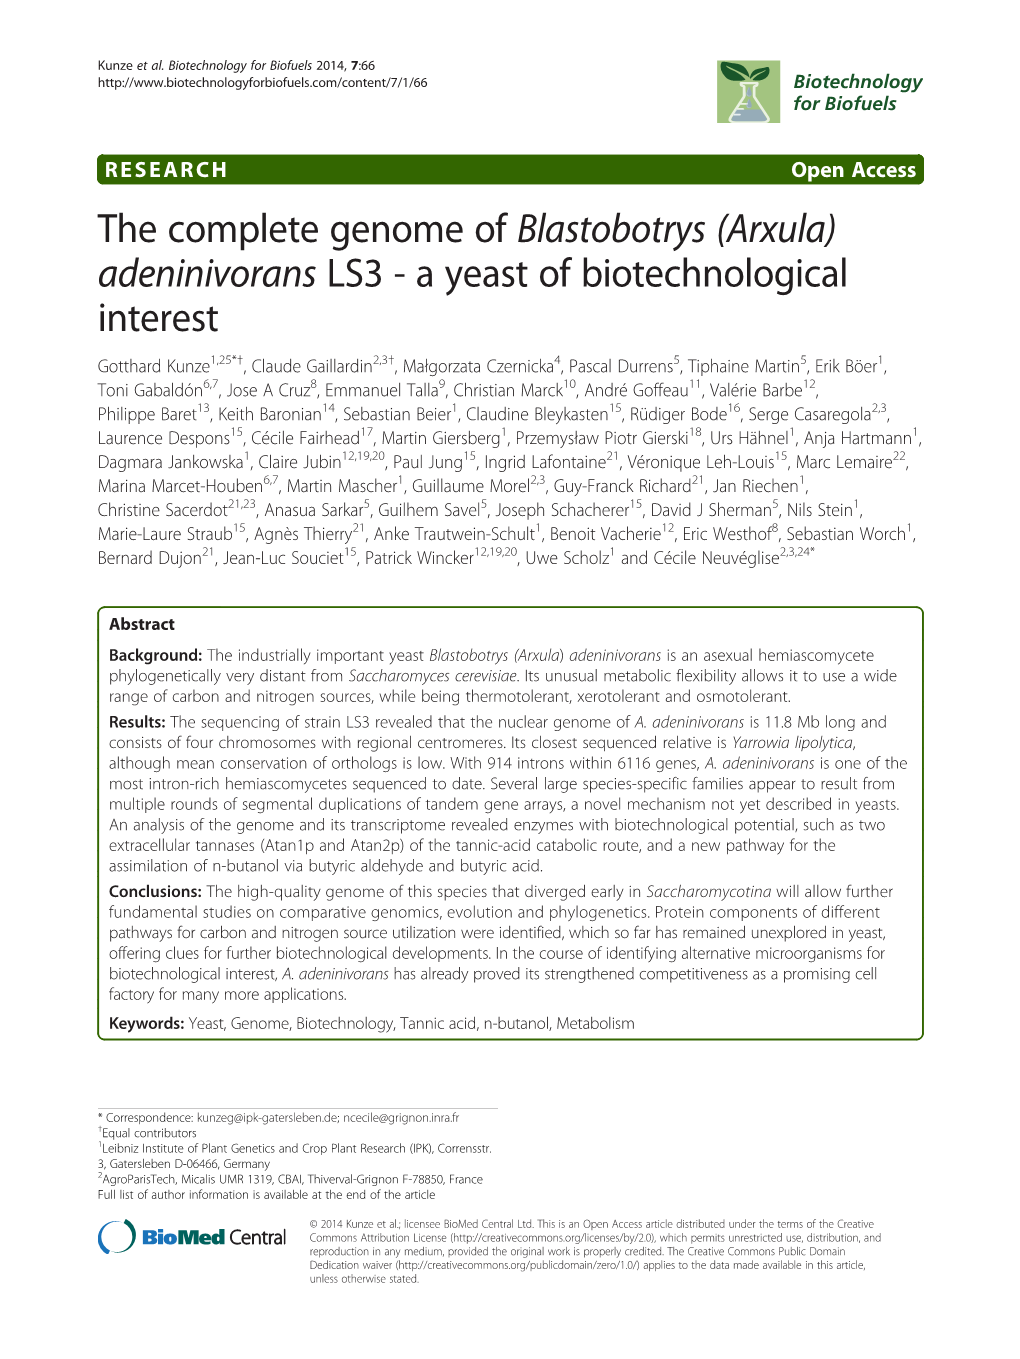 The Complete Genome of Blastobotrys (Arxula